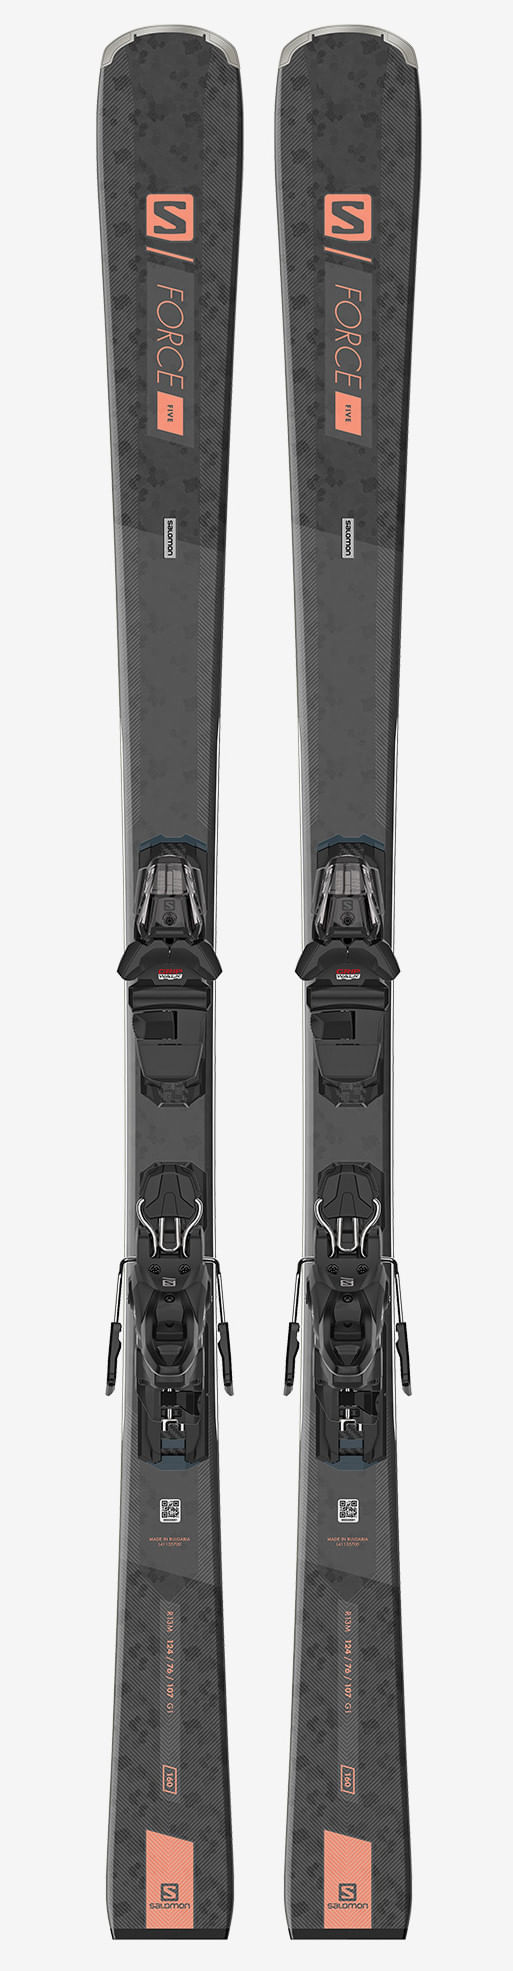 Salomon-S-Force-5-Women-s-Skis-With-M10-GW-Bindings-2021